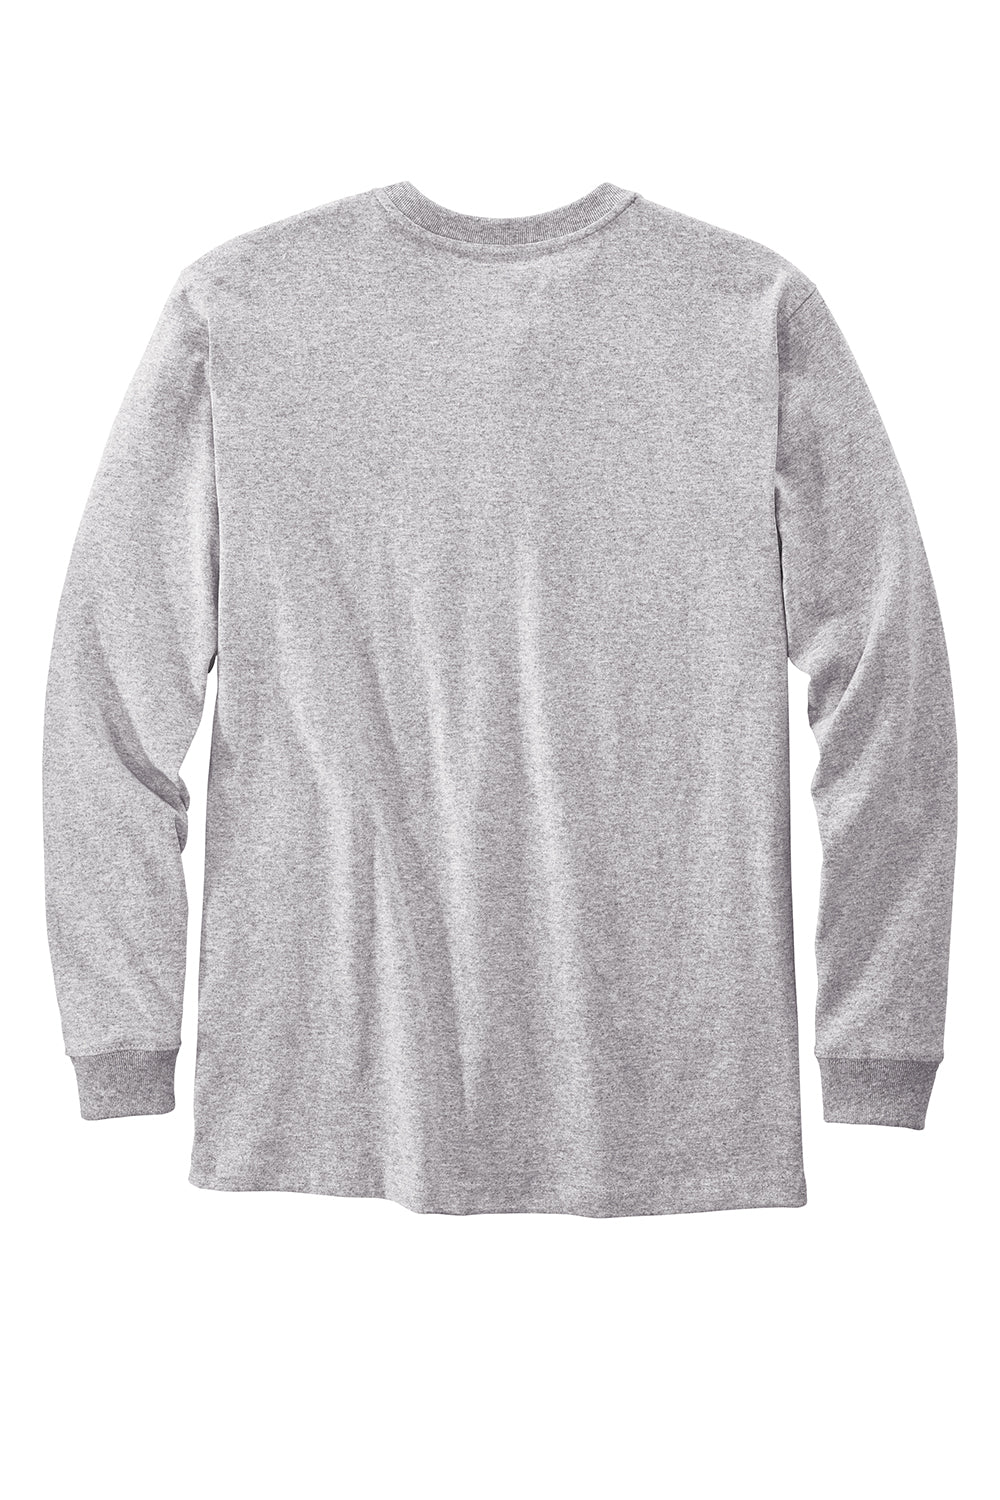 Carhartt CTK128 Mens Long Sleeve Henley T-Shirt w/ Pocket Heather Grey Flat Back